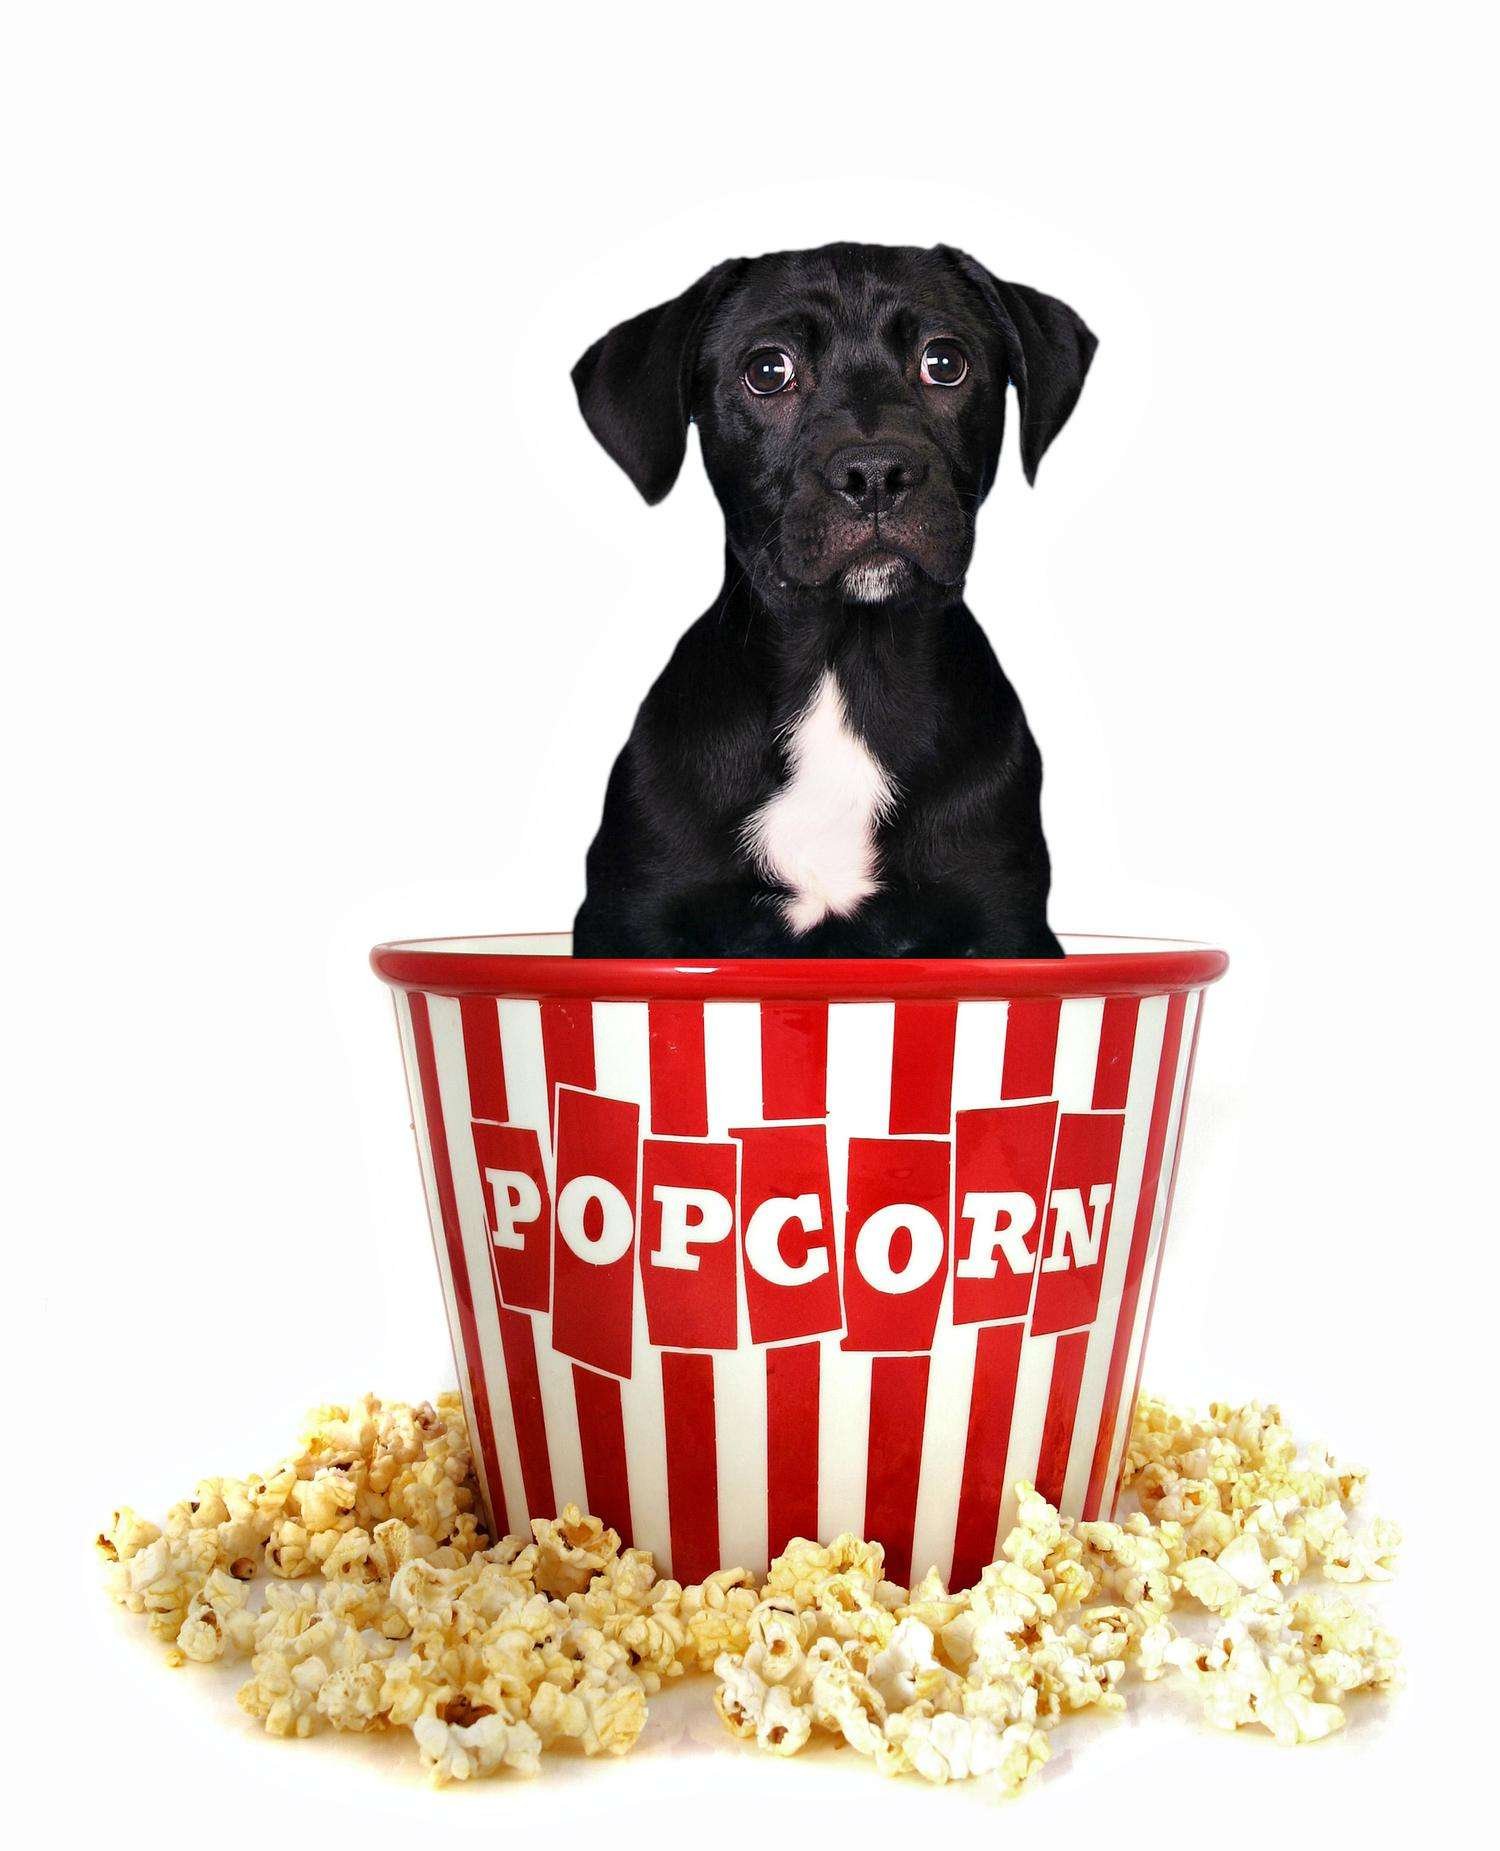 Can my dog eat popcorn